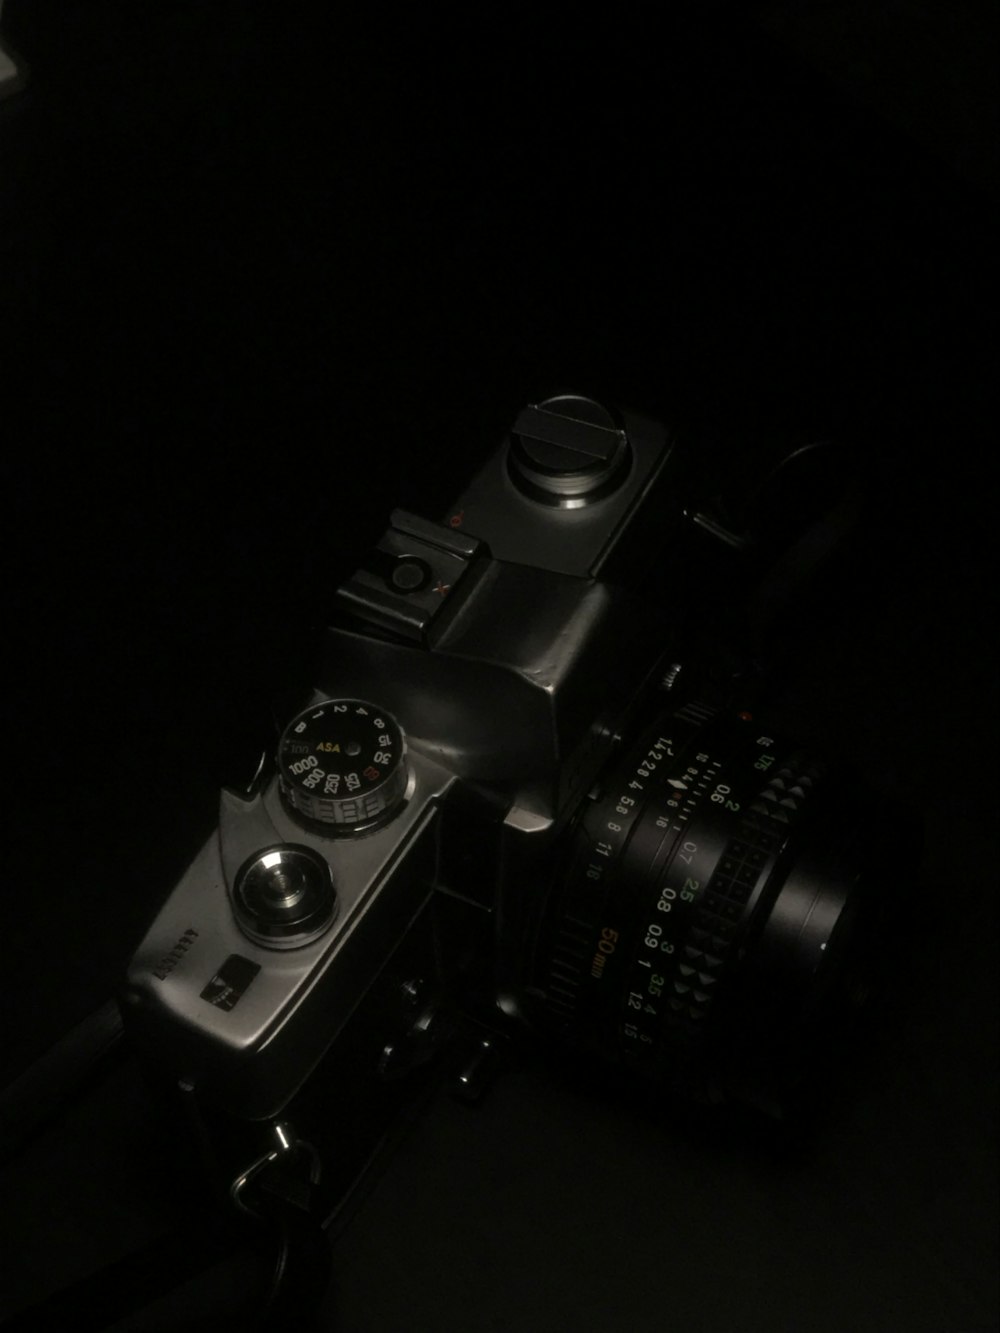 black dslr camera on black surface